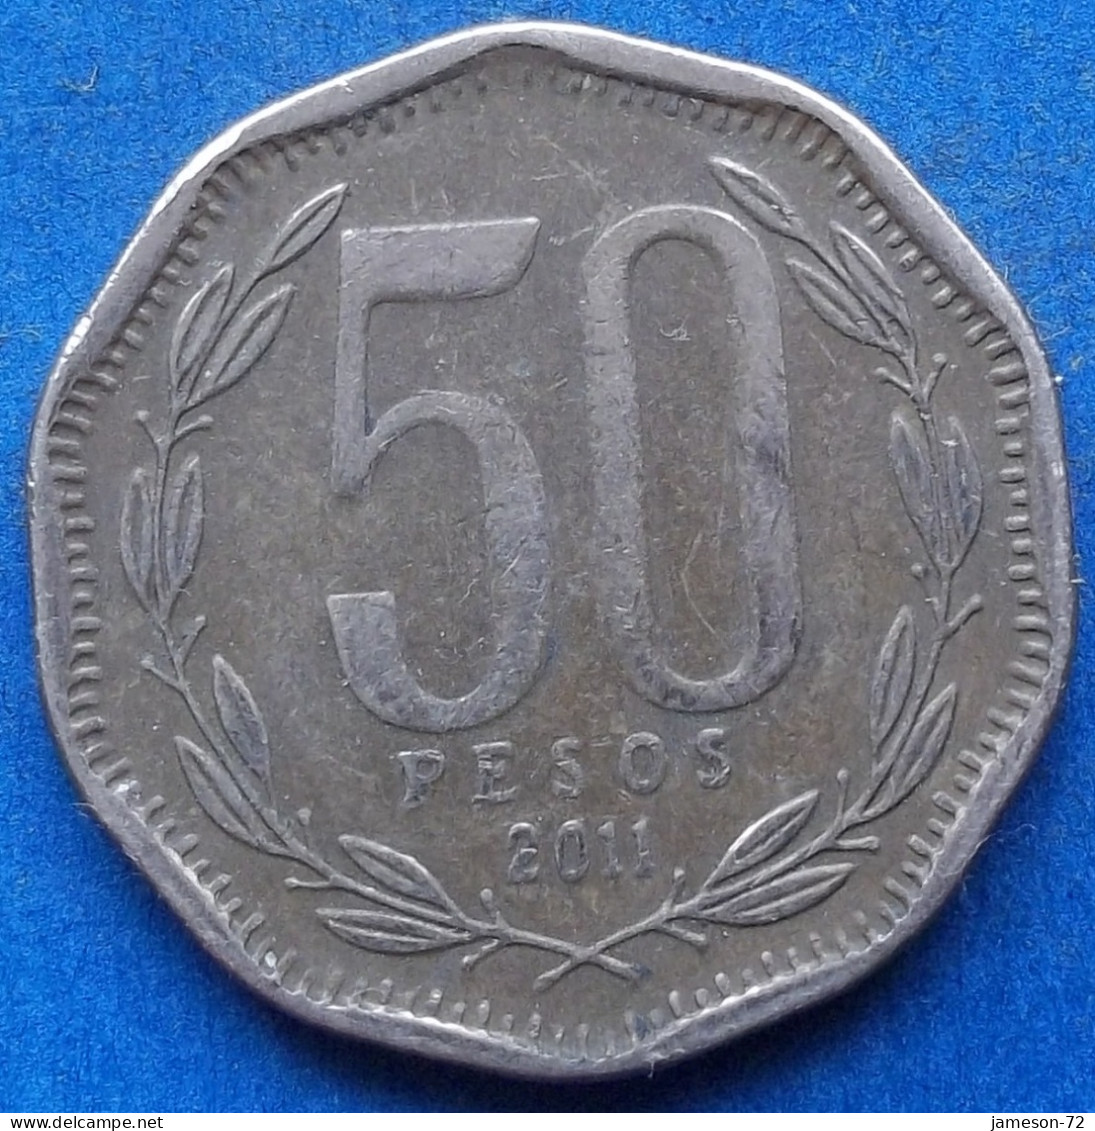 CHILE - 50 Pesos 2011 So KM# 219.2 Monetary Reform (1975) - Edelweiss Coins - Chili